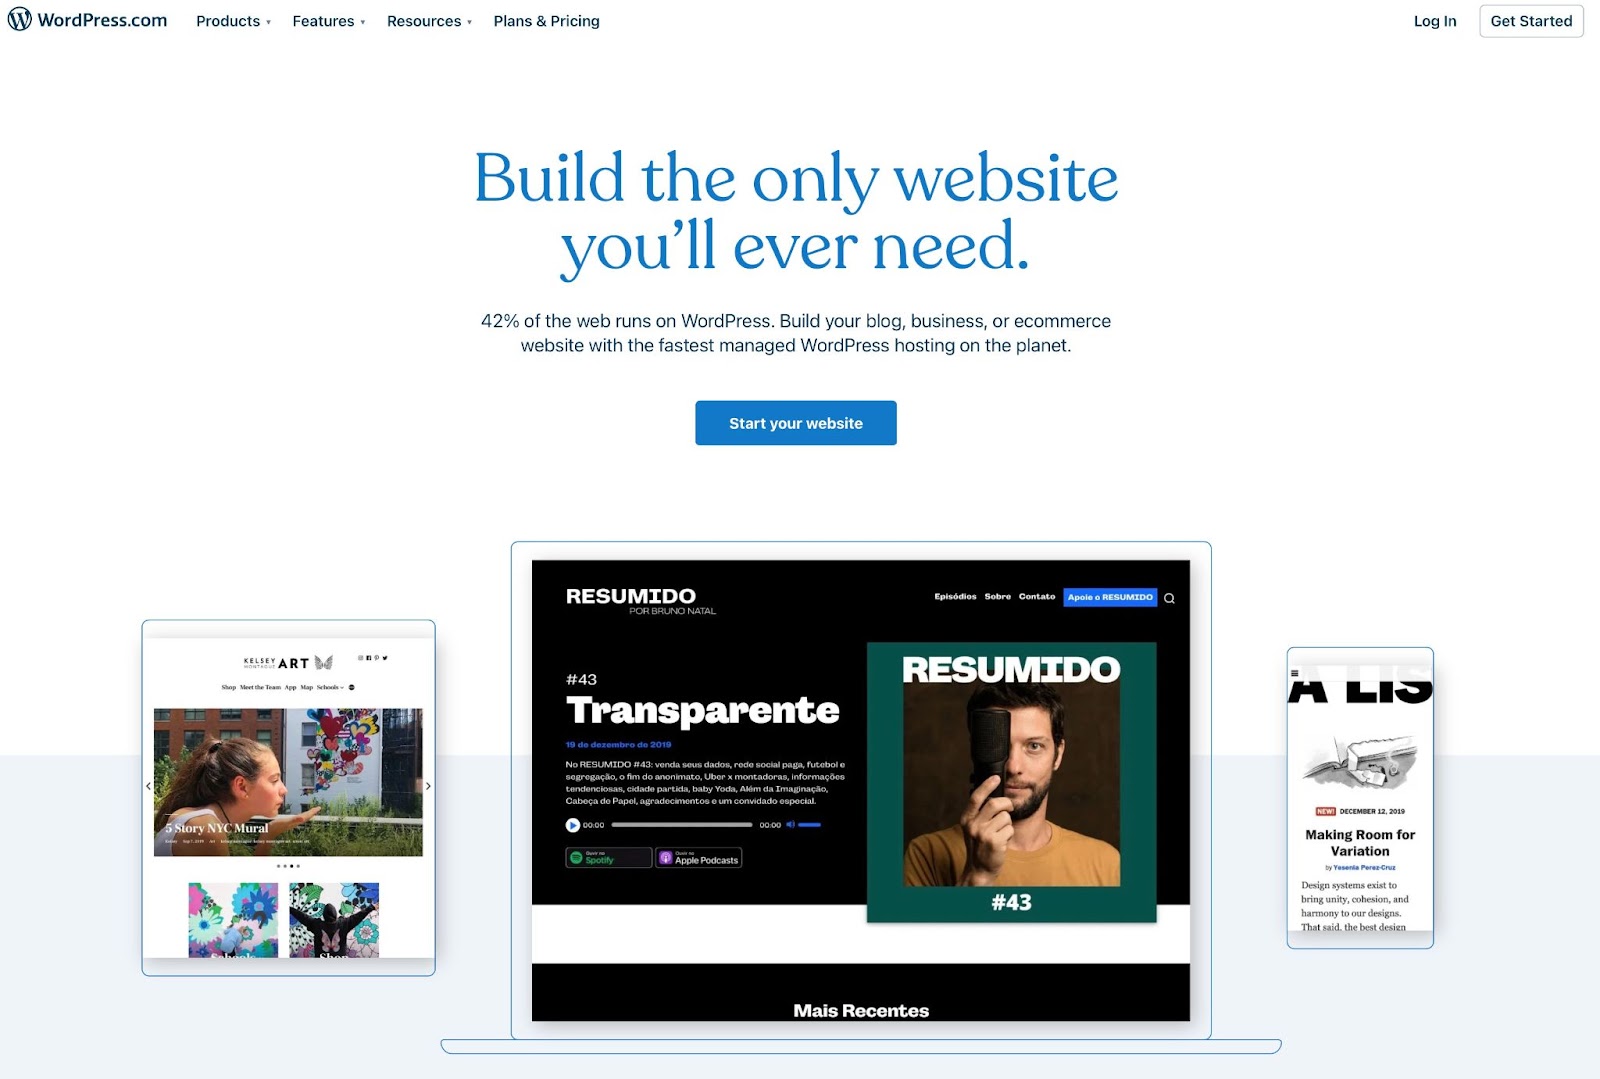 The WordPress Homepage